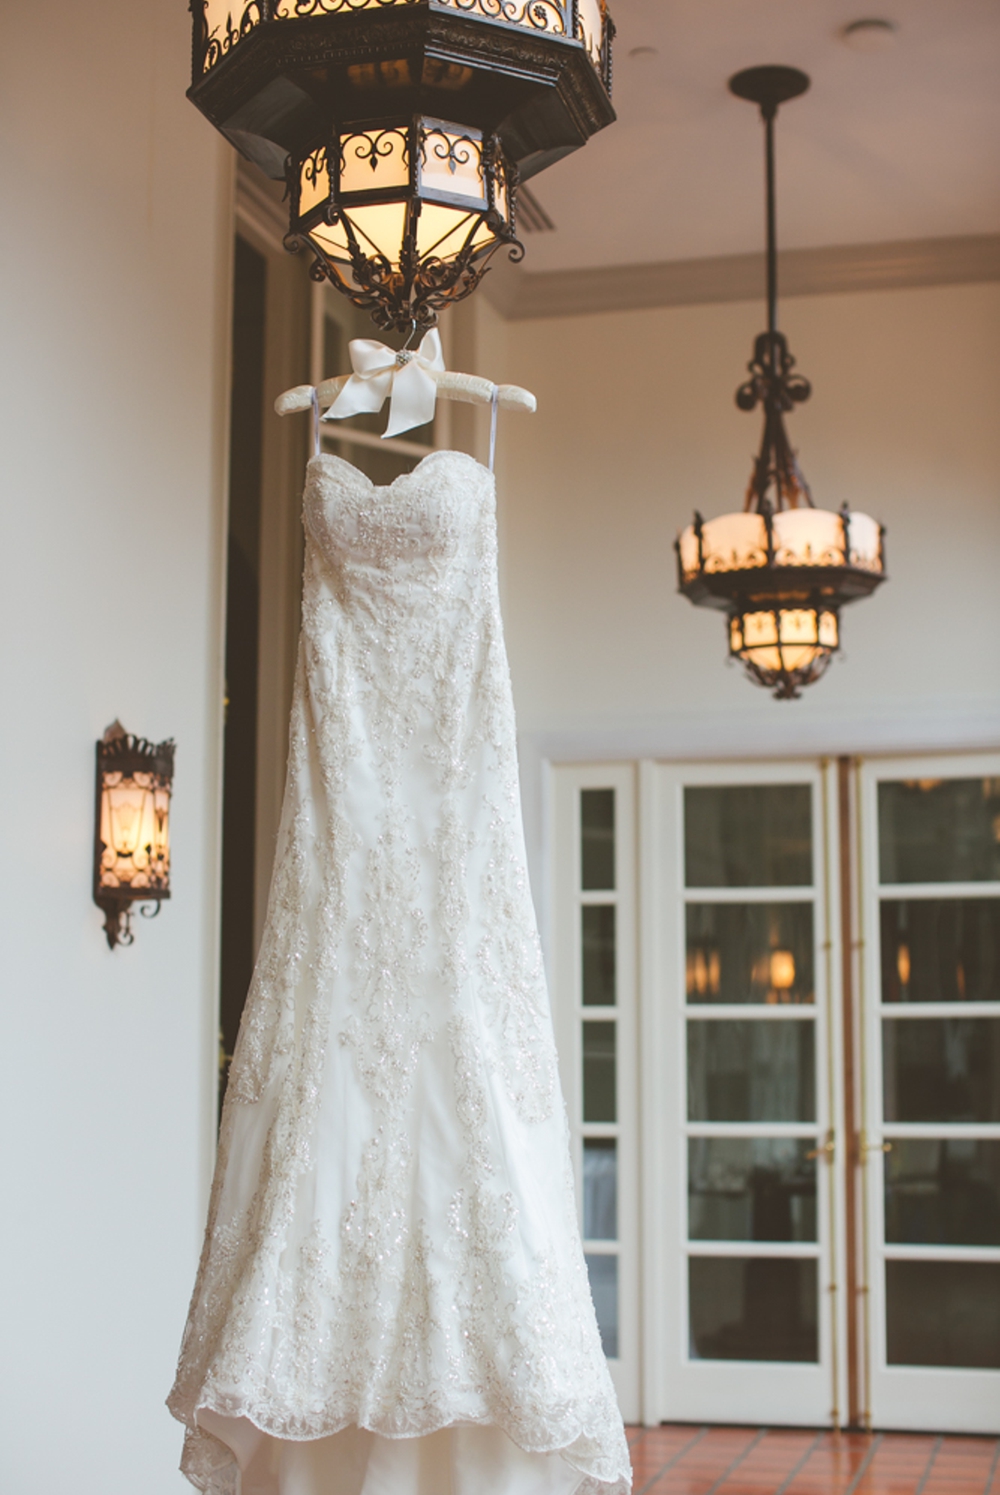 Bride's Dress Hanging on Light Fixture